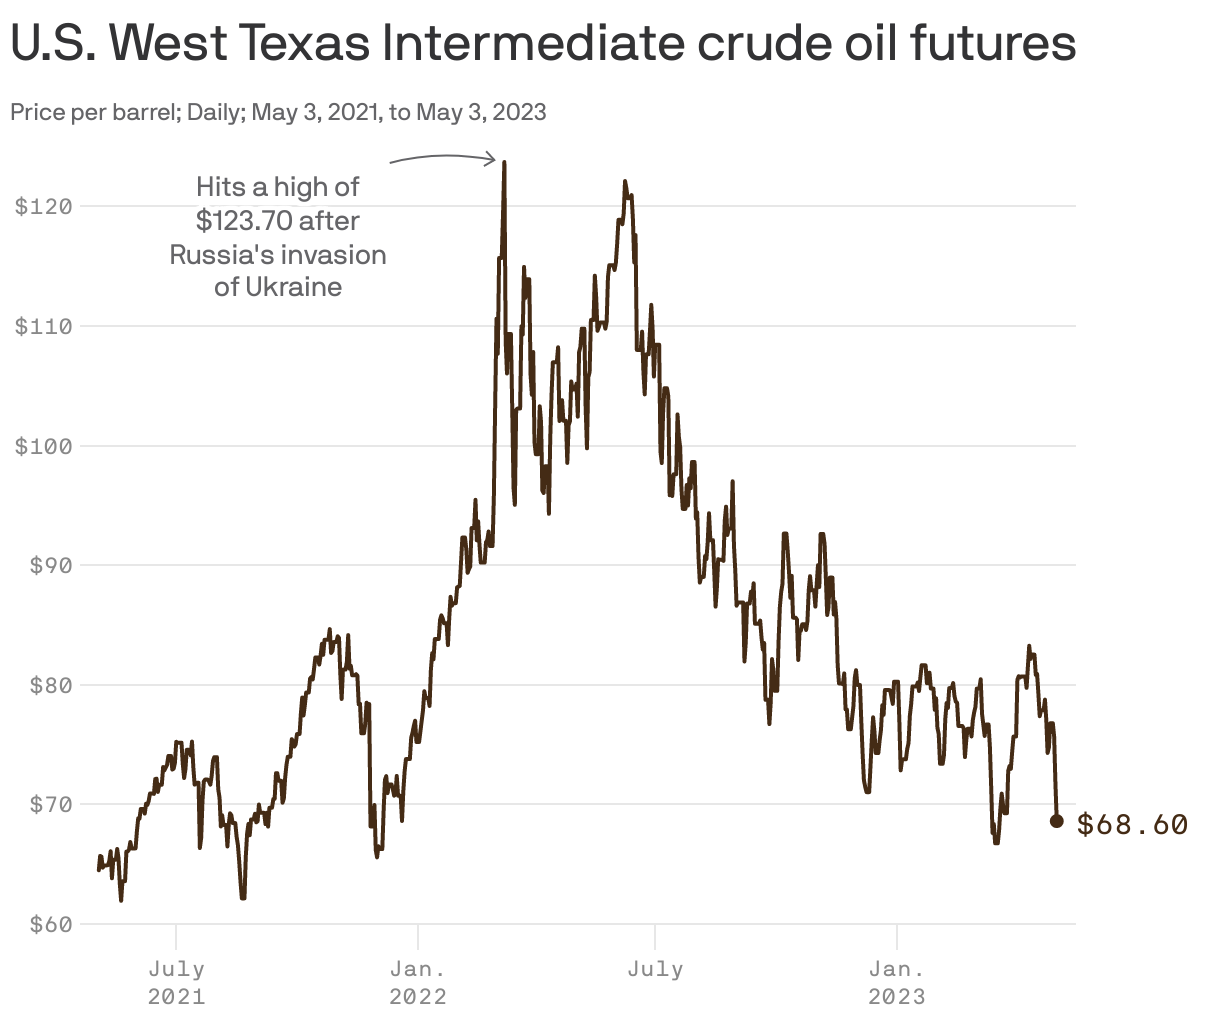 U.S. West Texas Intermediate crude oil futures